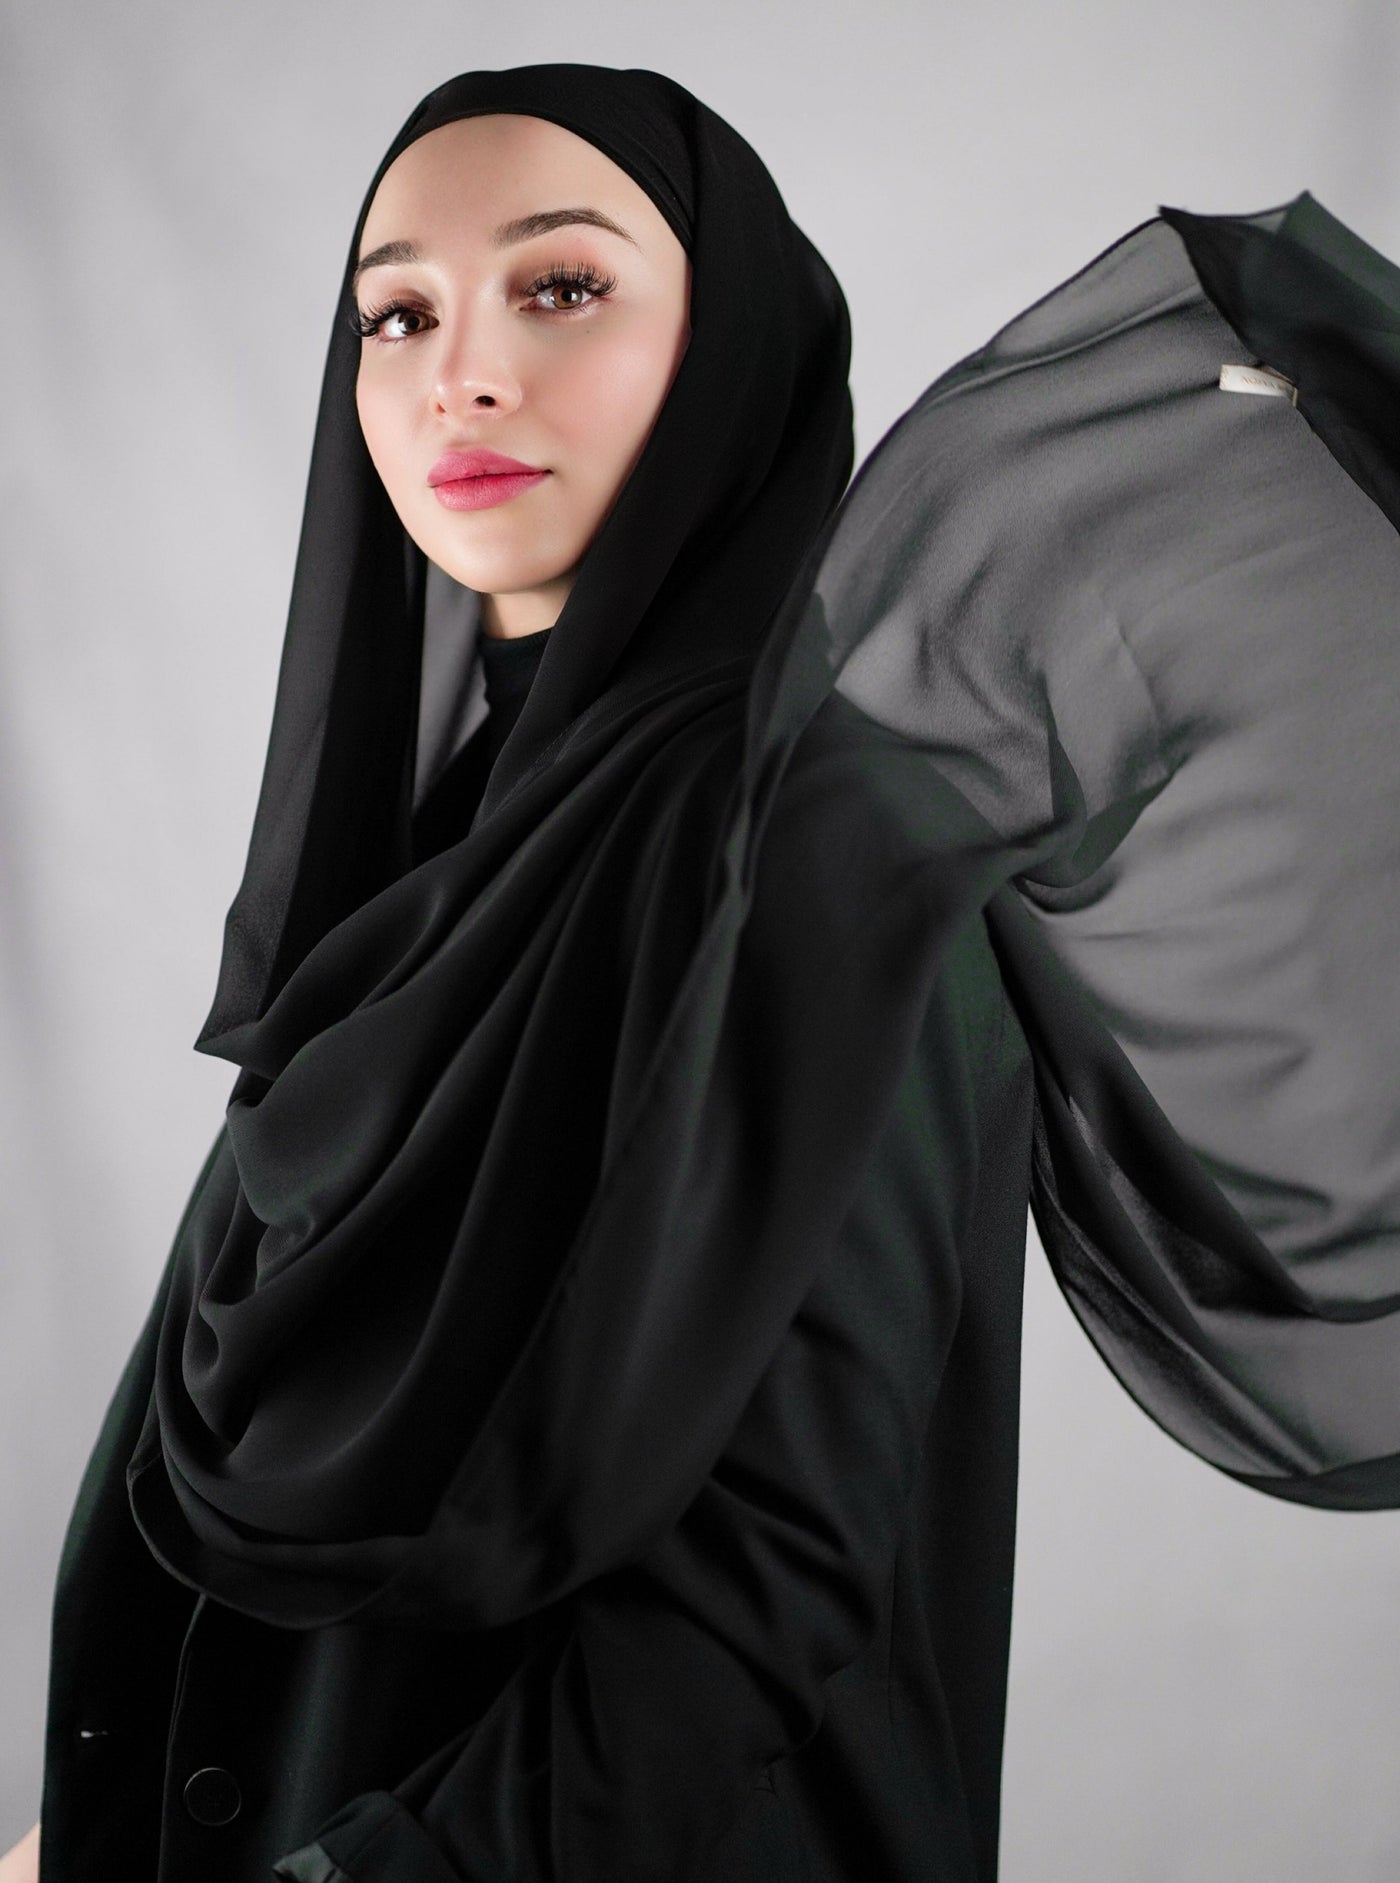 Fertiger Chiffon Hijab mit Unterkappe – schwarz